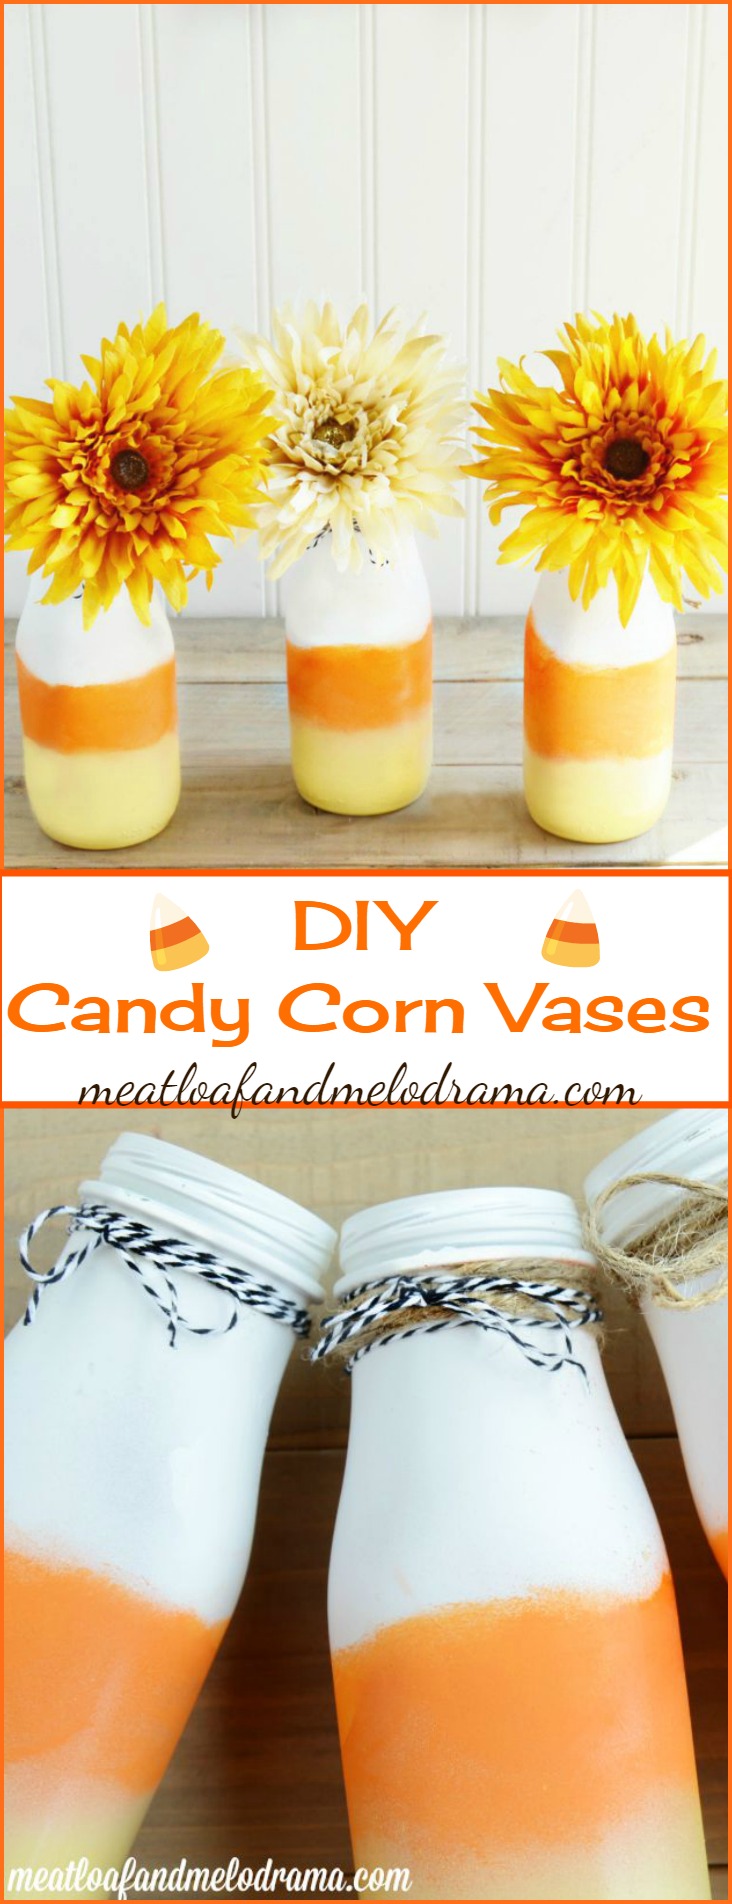 diy candy corn vases